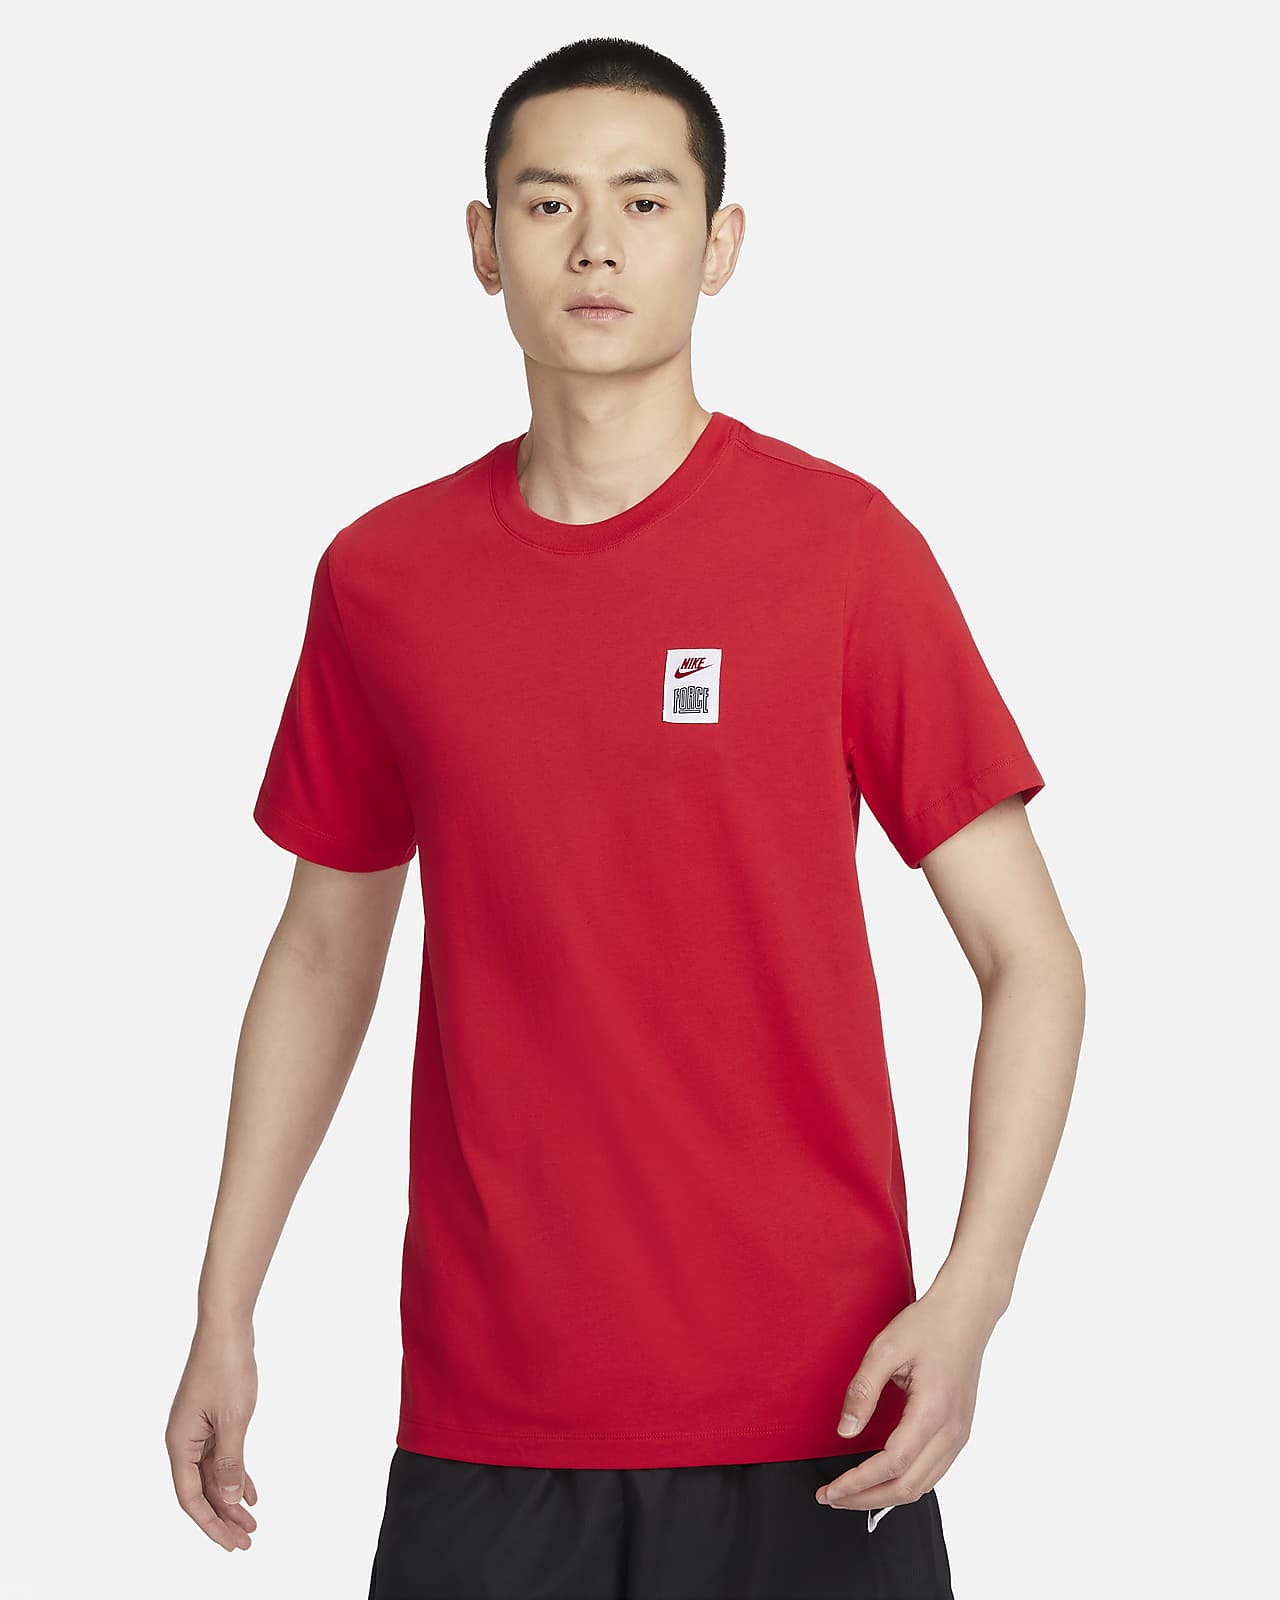 Nike Alpha Bra T Shirts - Buy Nike Alpha Bra T Shirts online in India